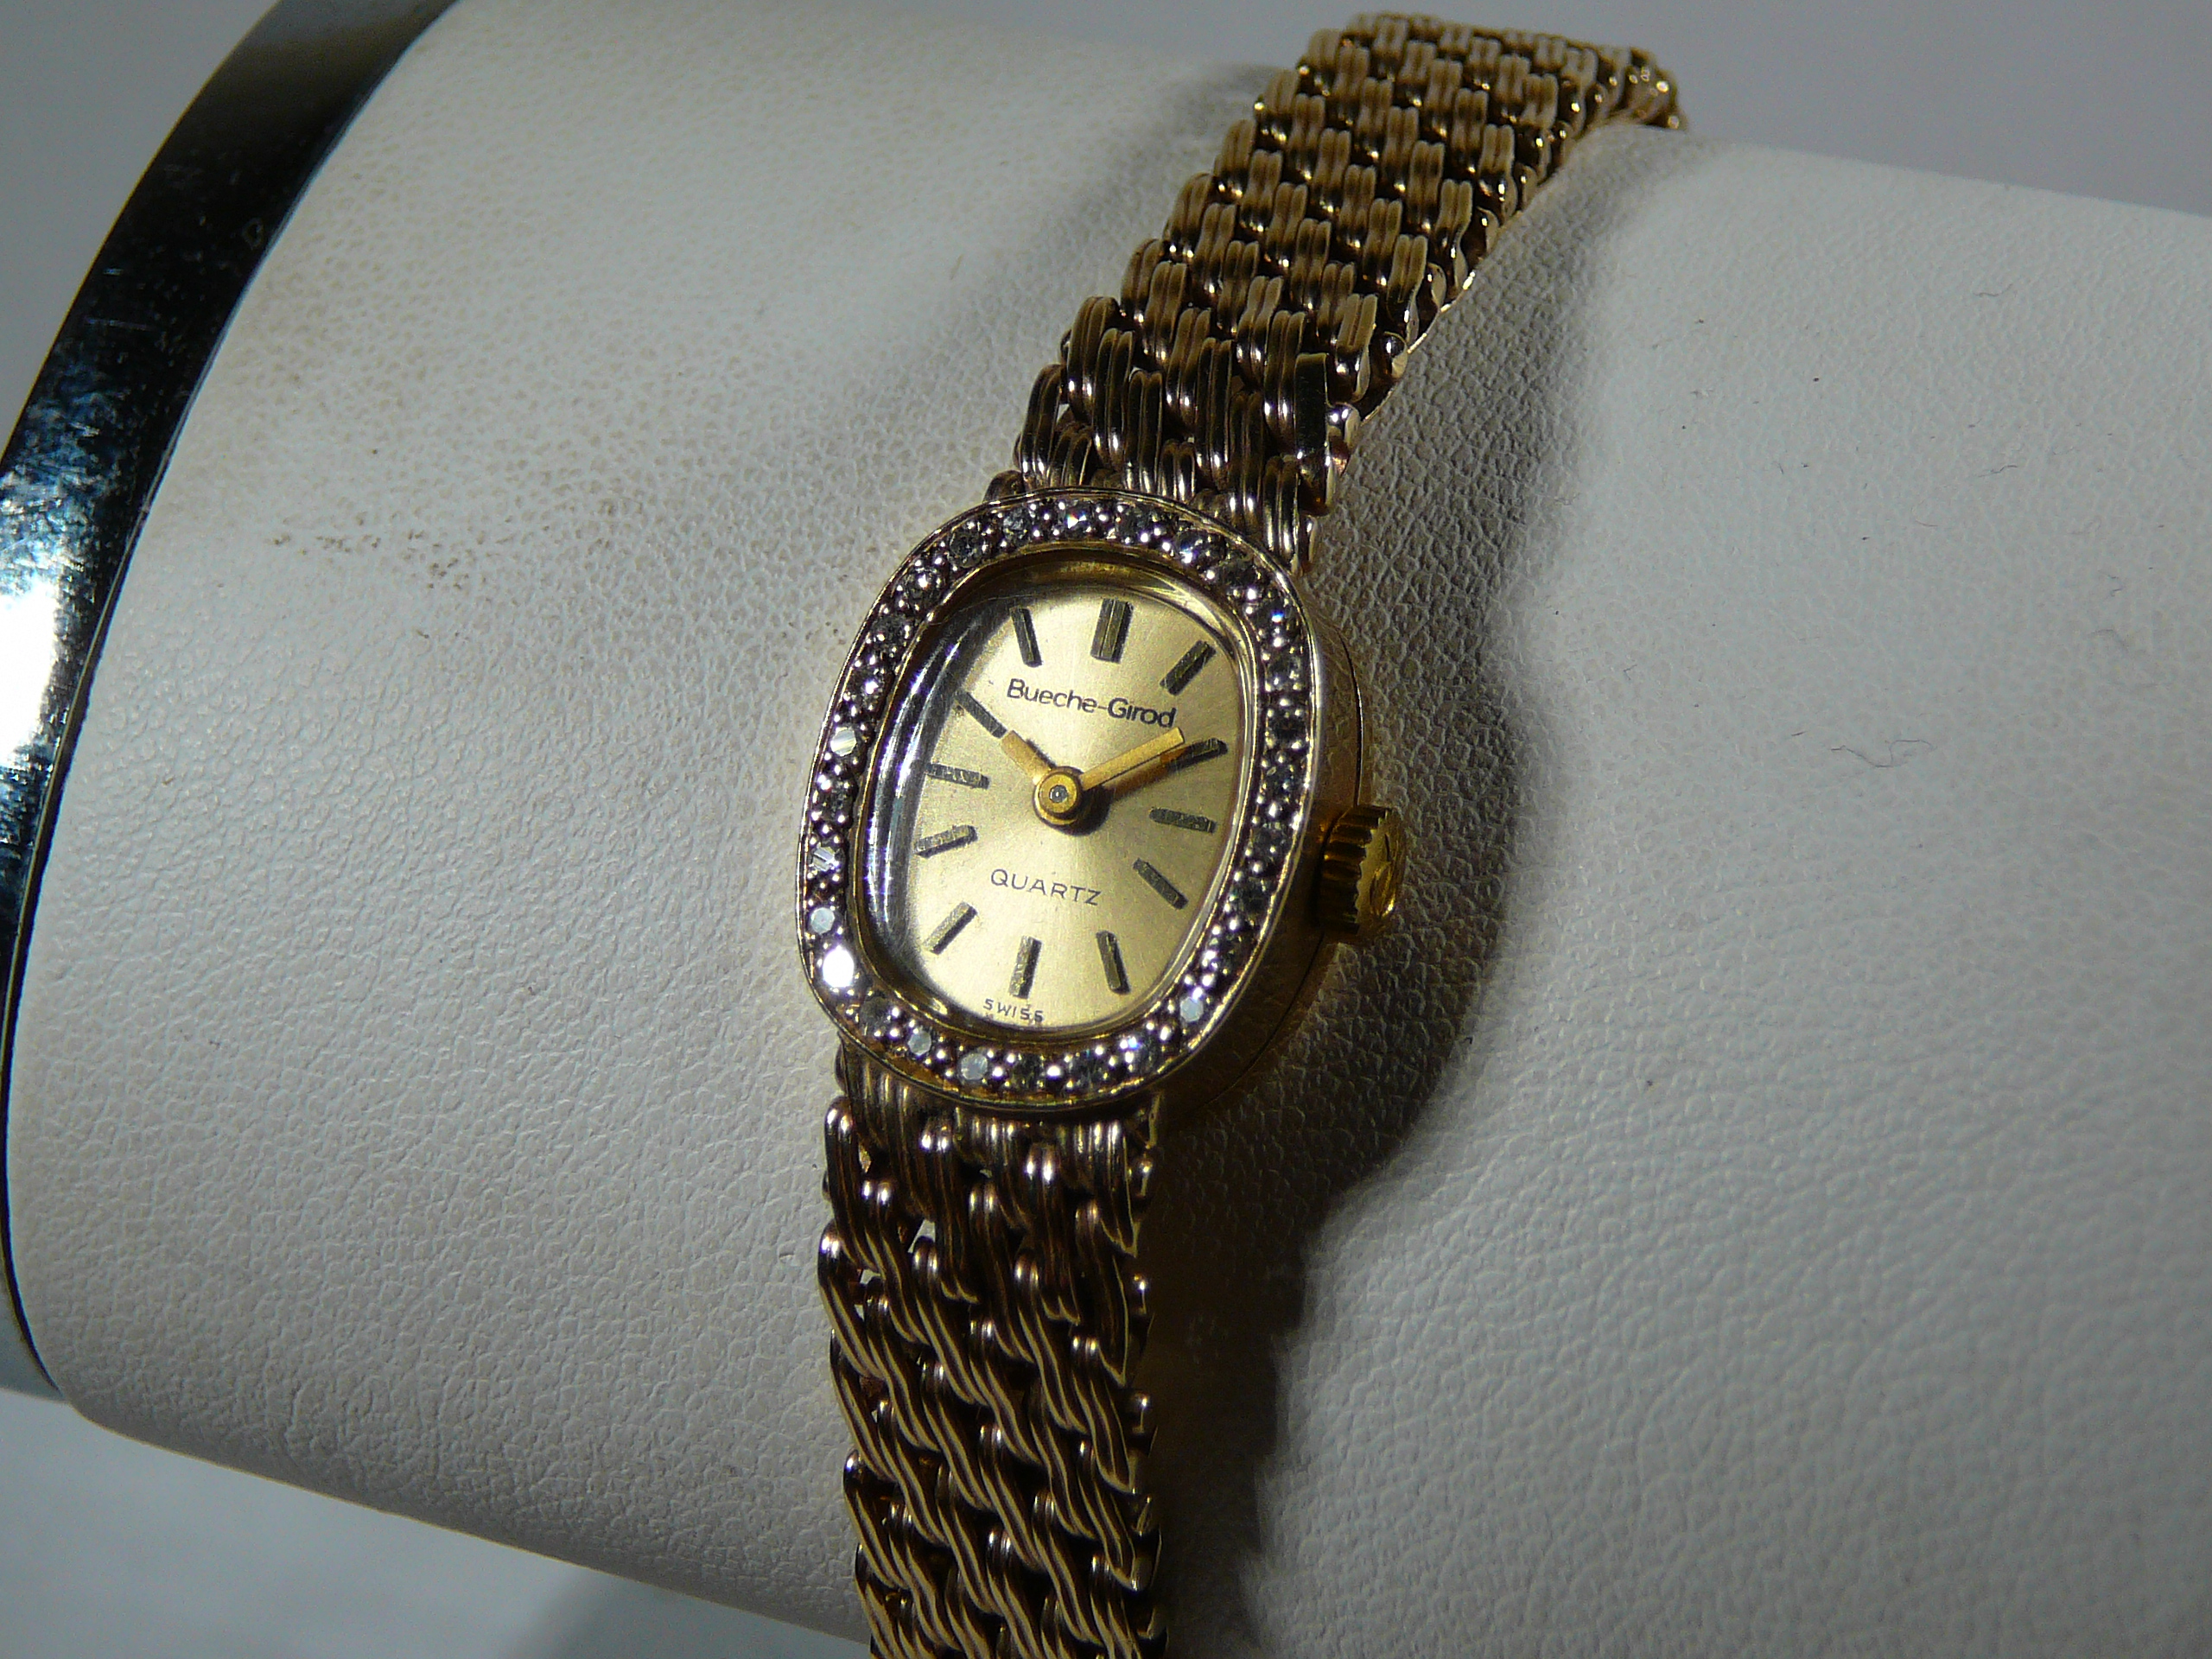 Ladies Bueche-Girod Wrist Watch - Image 2 of 3